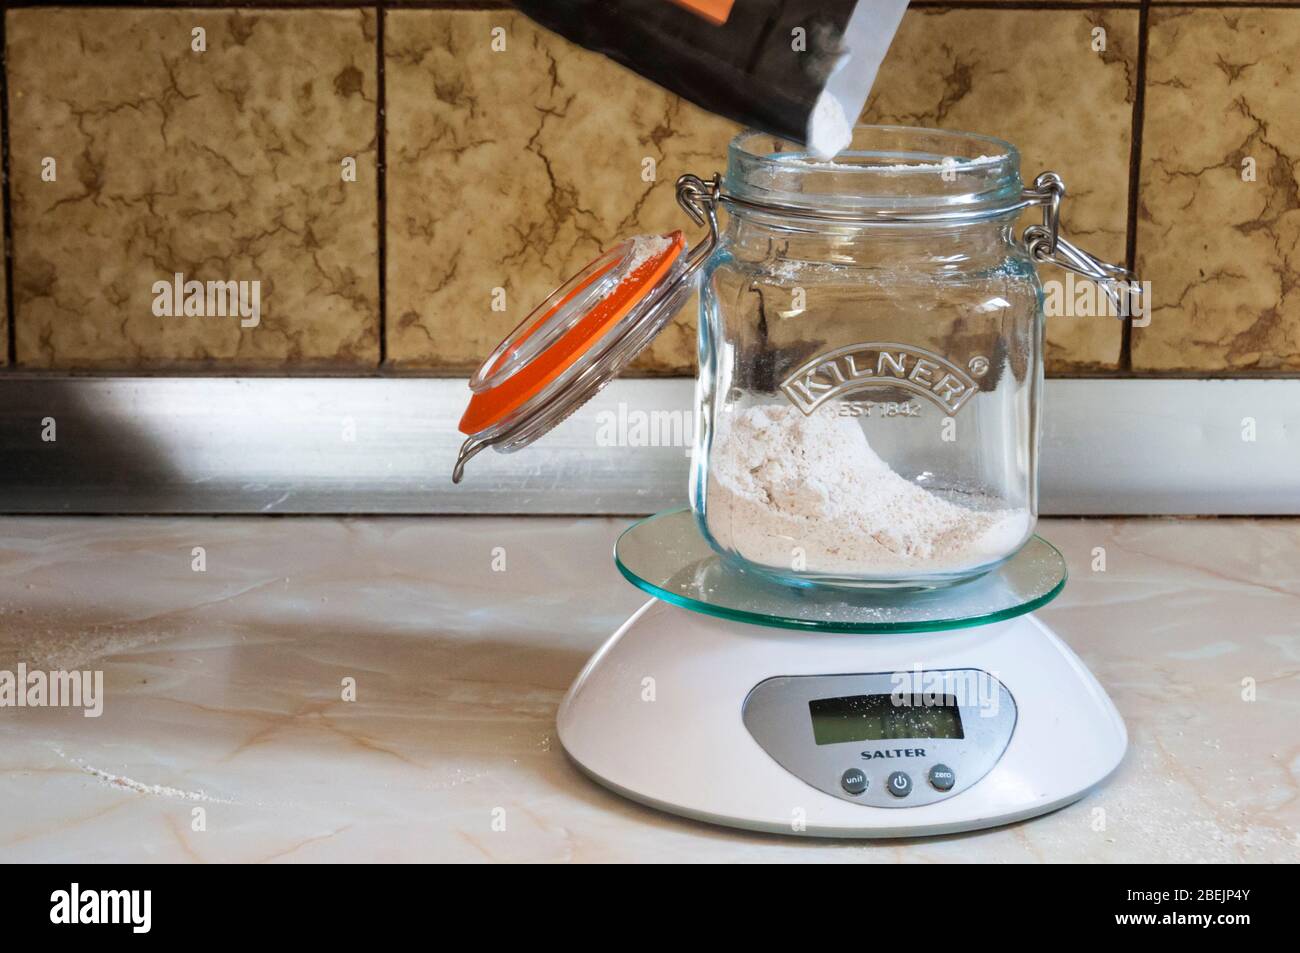 Preparing a sourdough starter - measuring flour into a glass Kilner jar  Stock Photo - Alamy